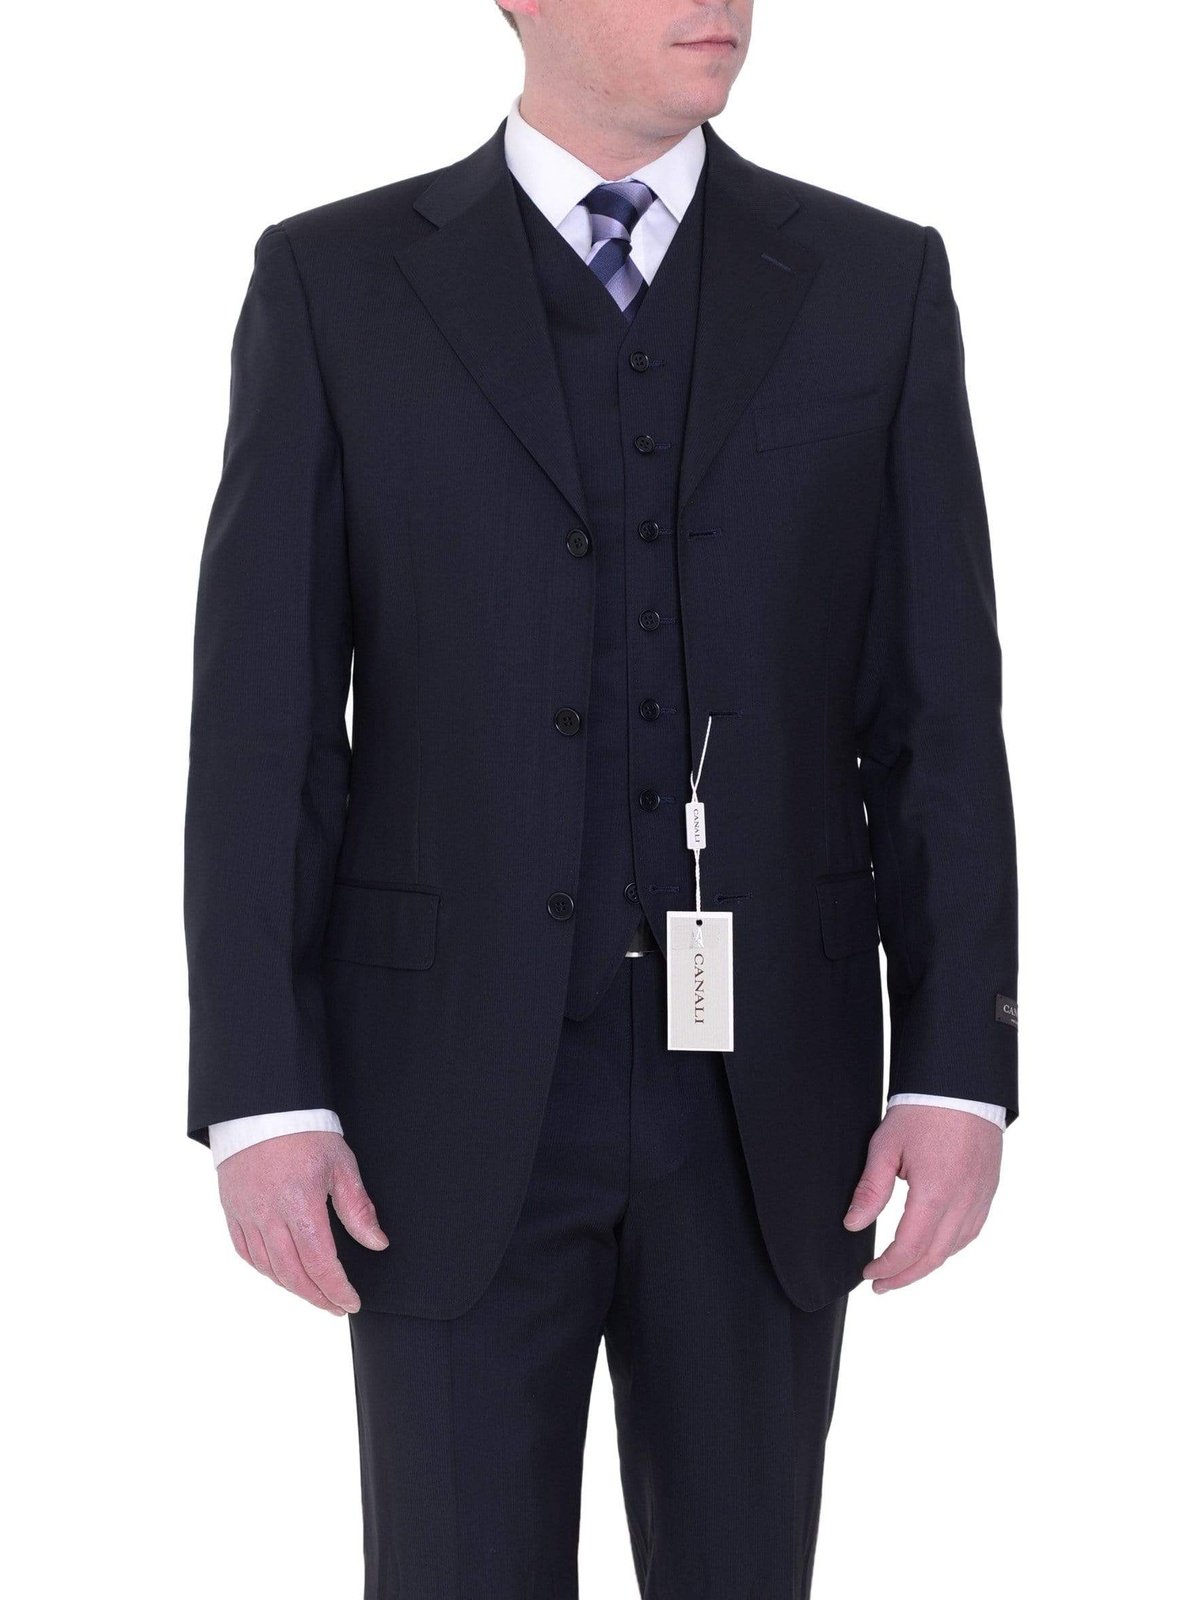 Canali THREE PIECE SUITS Canali Drop 8 38L 48T Navy Blue Tonal Striped Three Button Three Piece Wool Suit